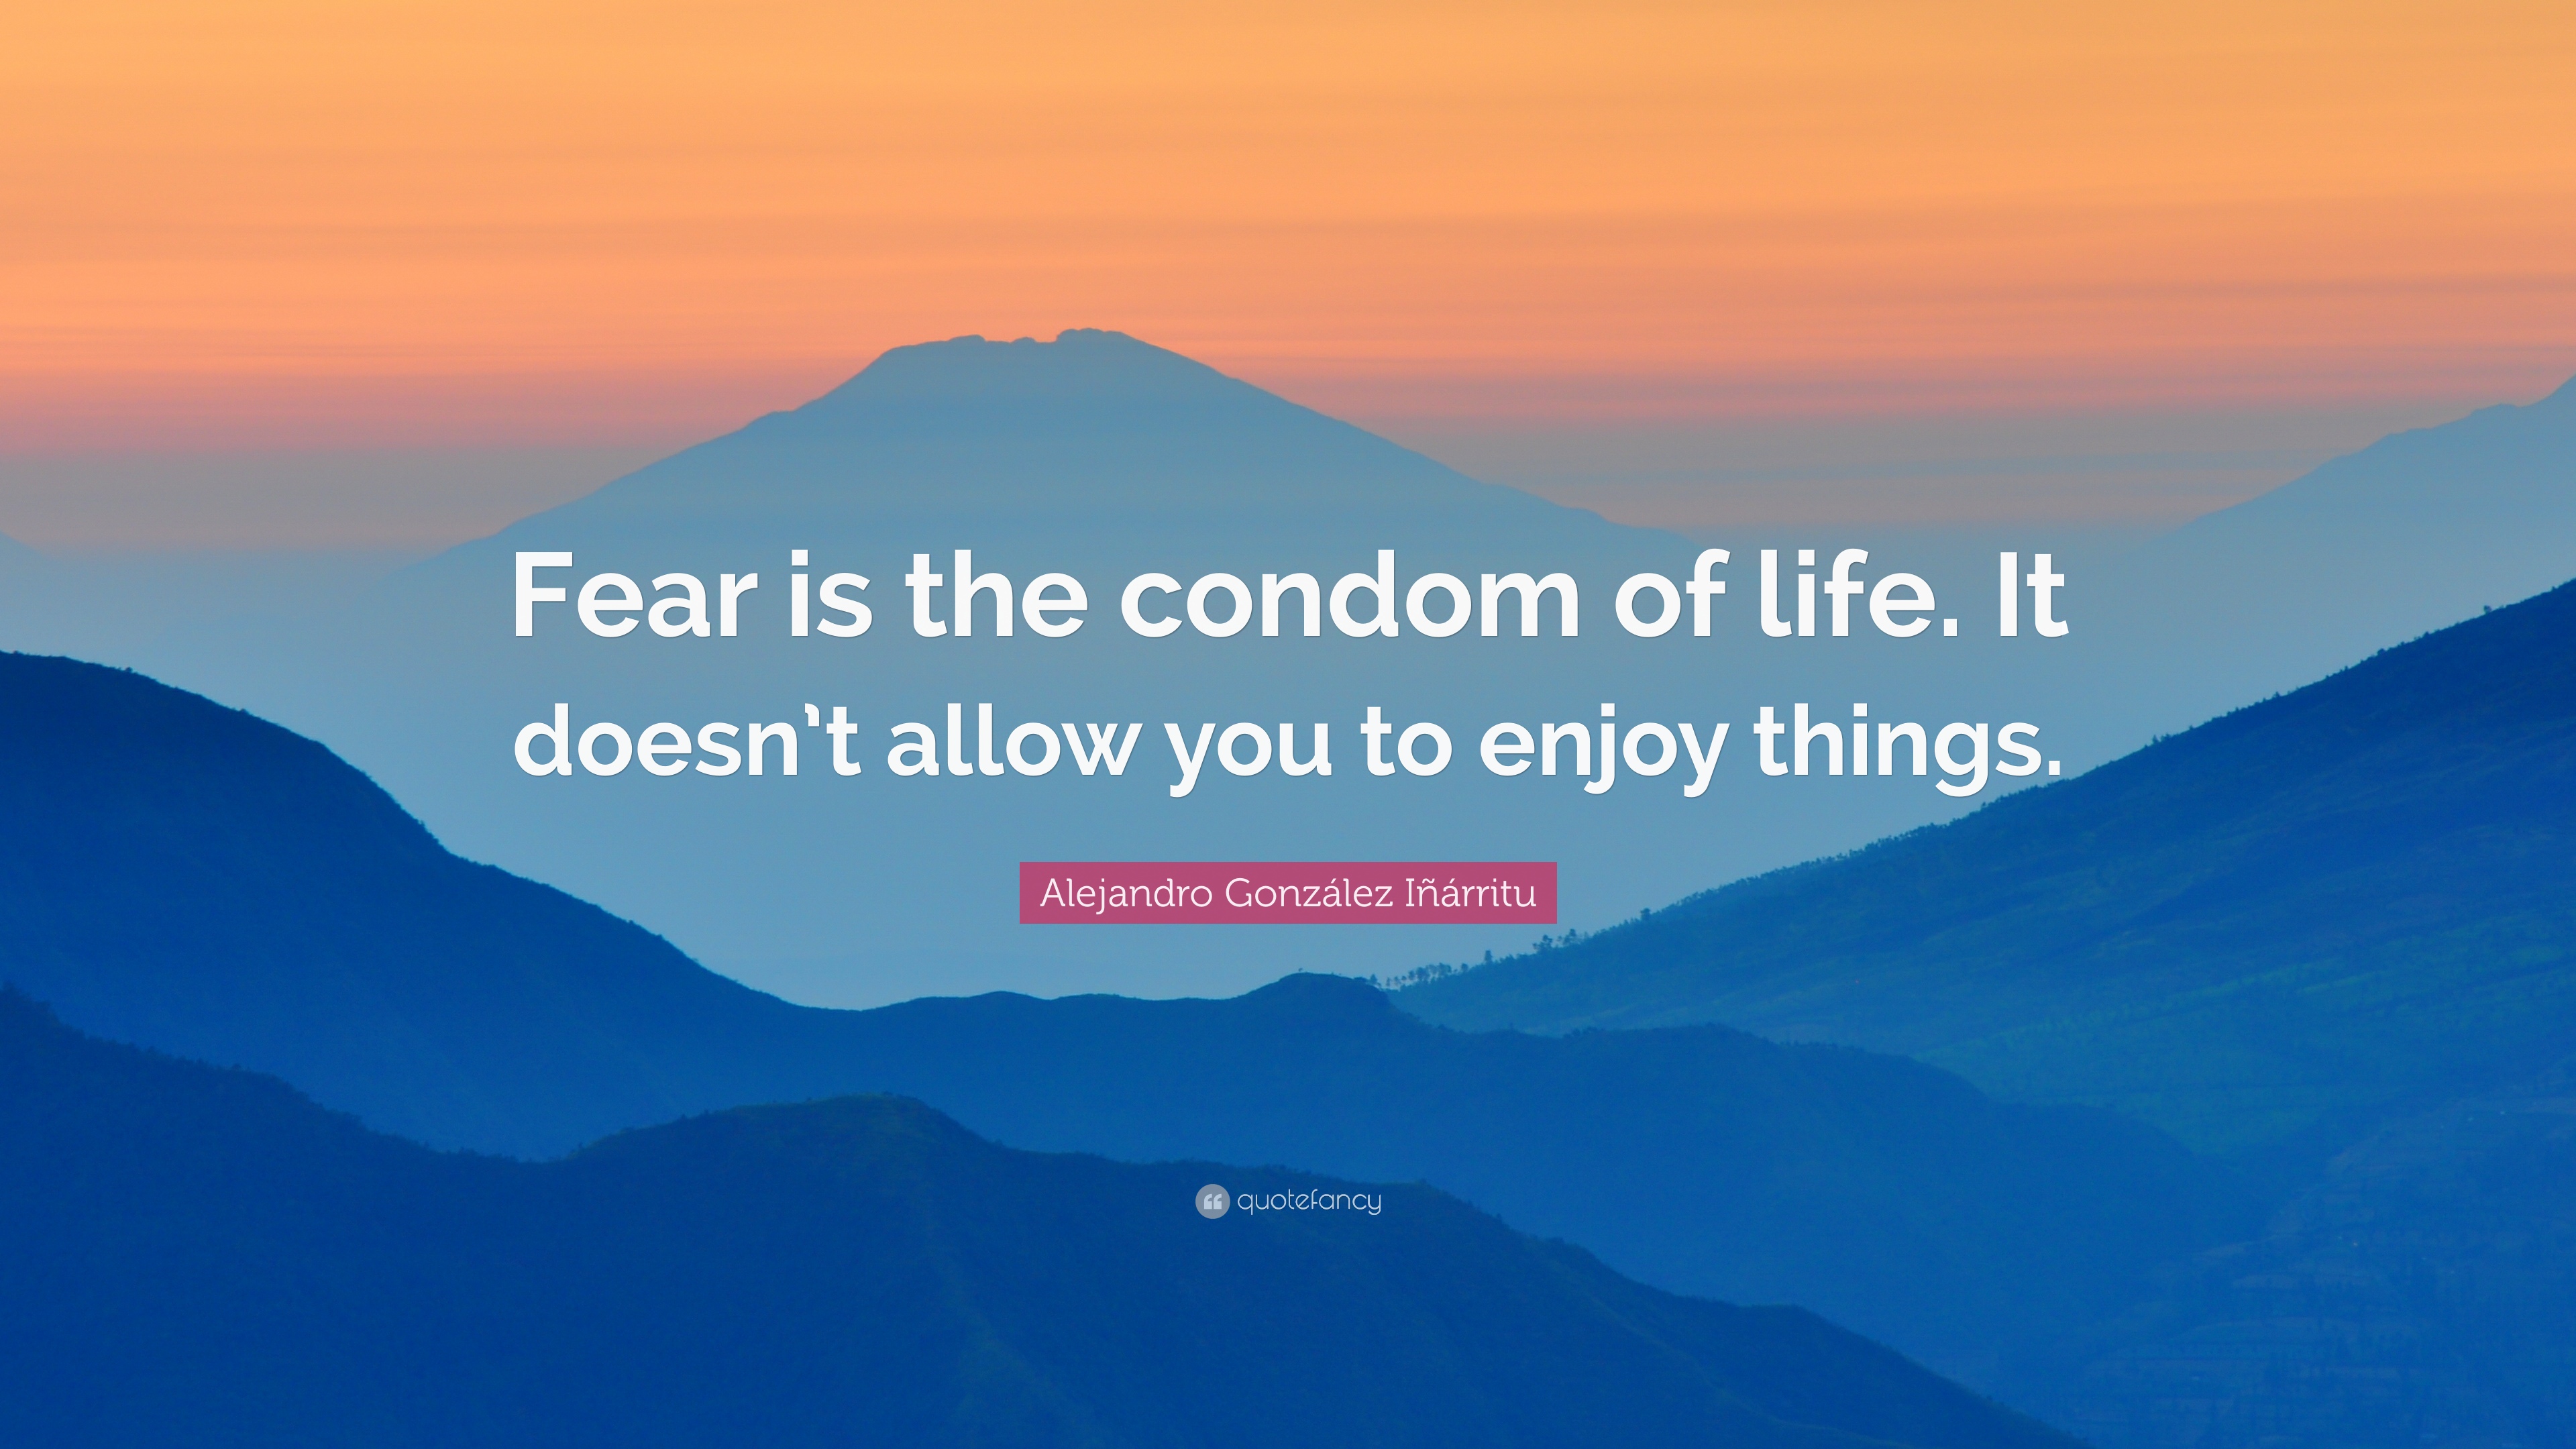 Alejandro González Iñárritu Quote: “Fear is the condom of life. It